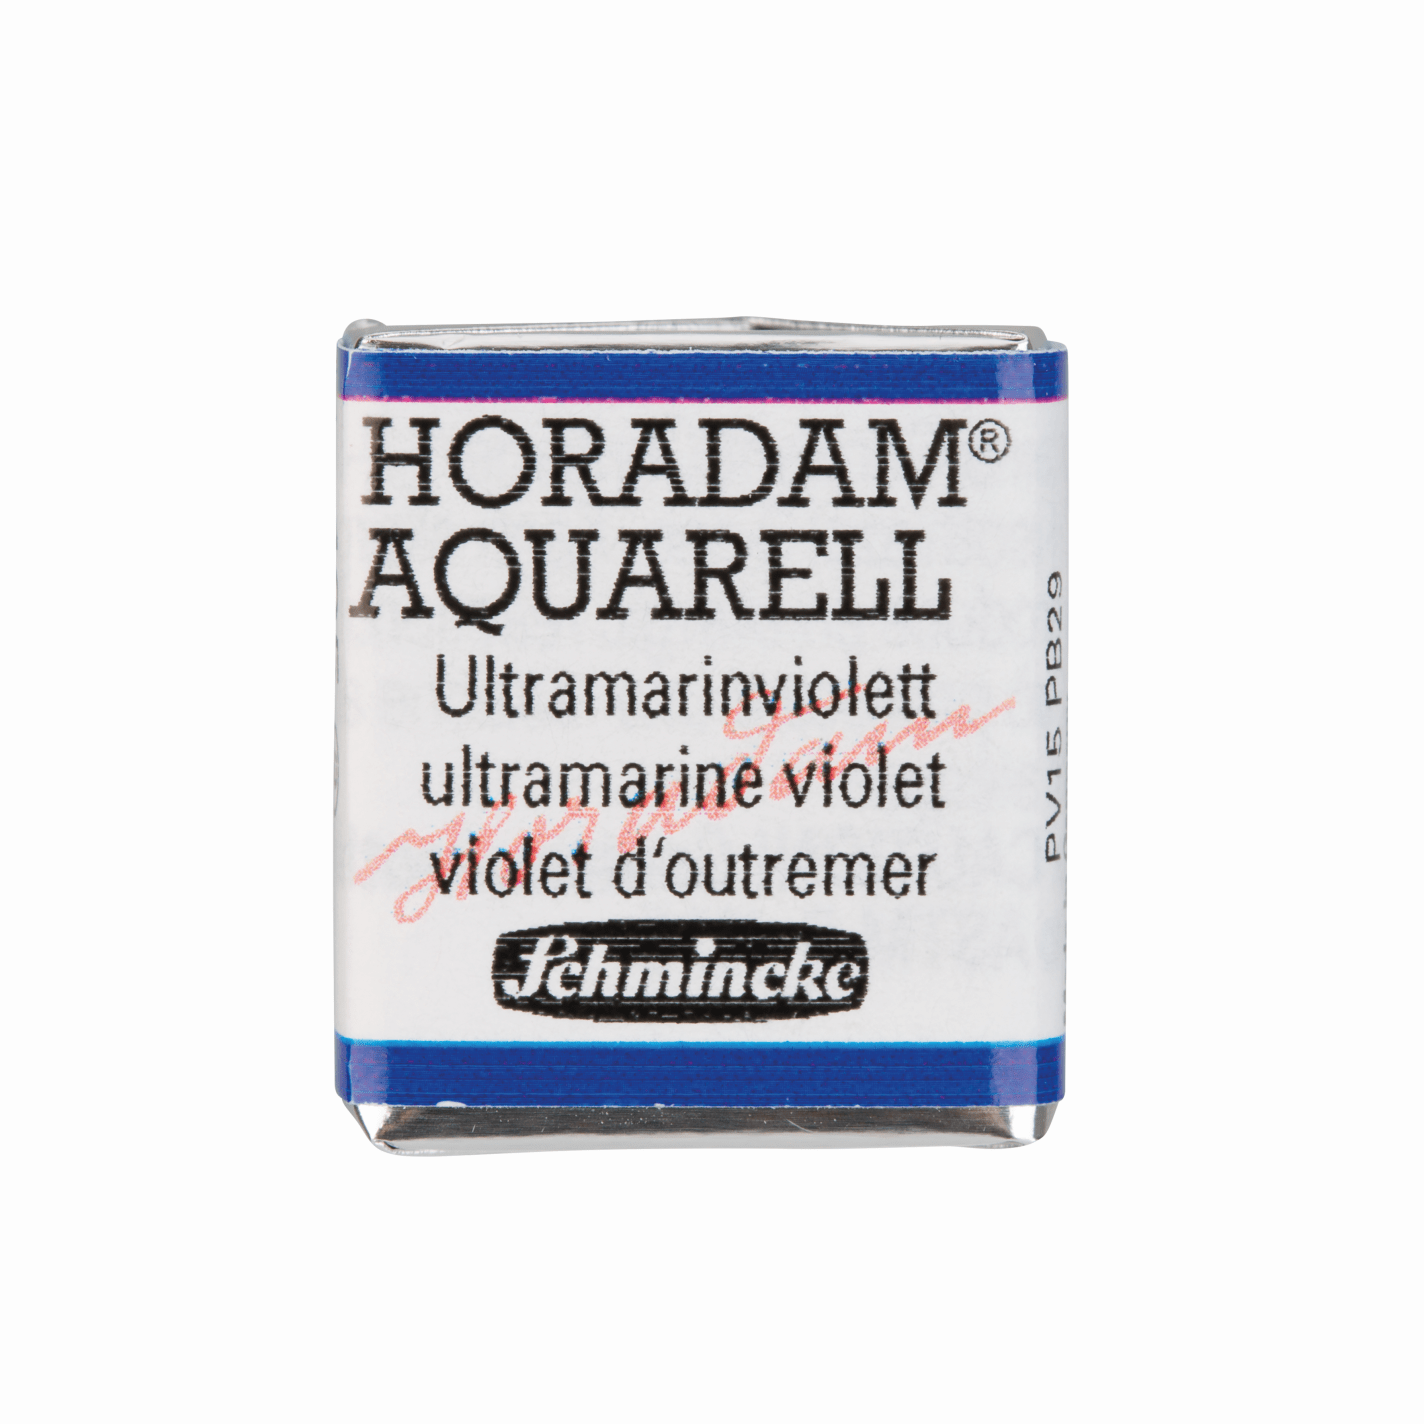 Schmincke Horadam Aquarell pans 1/2 pan Ultramarine Violet